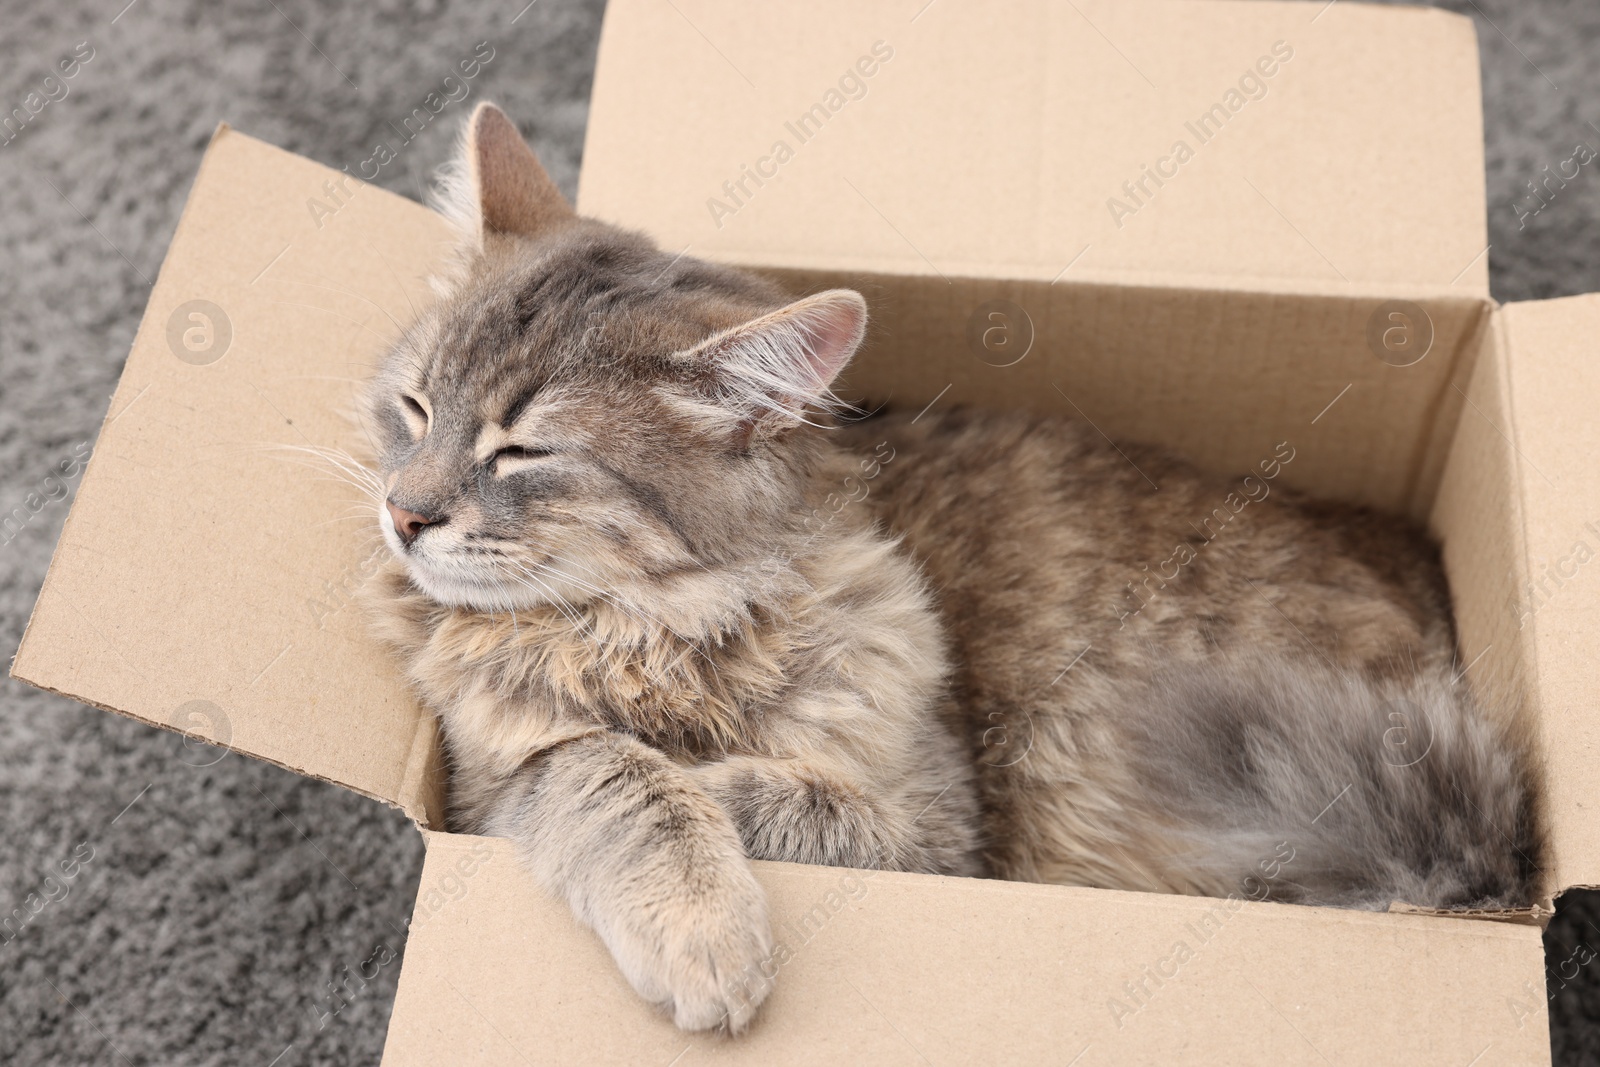 Photo of Cute fluffy cat in cardboard box on carpet